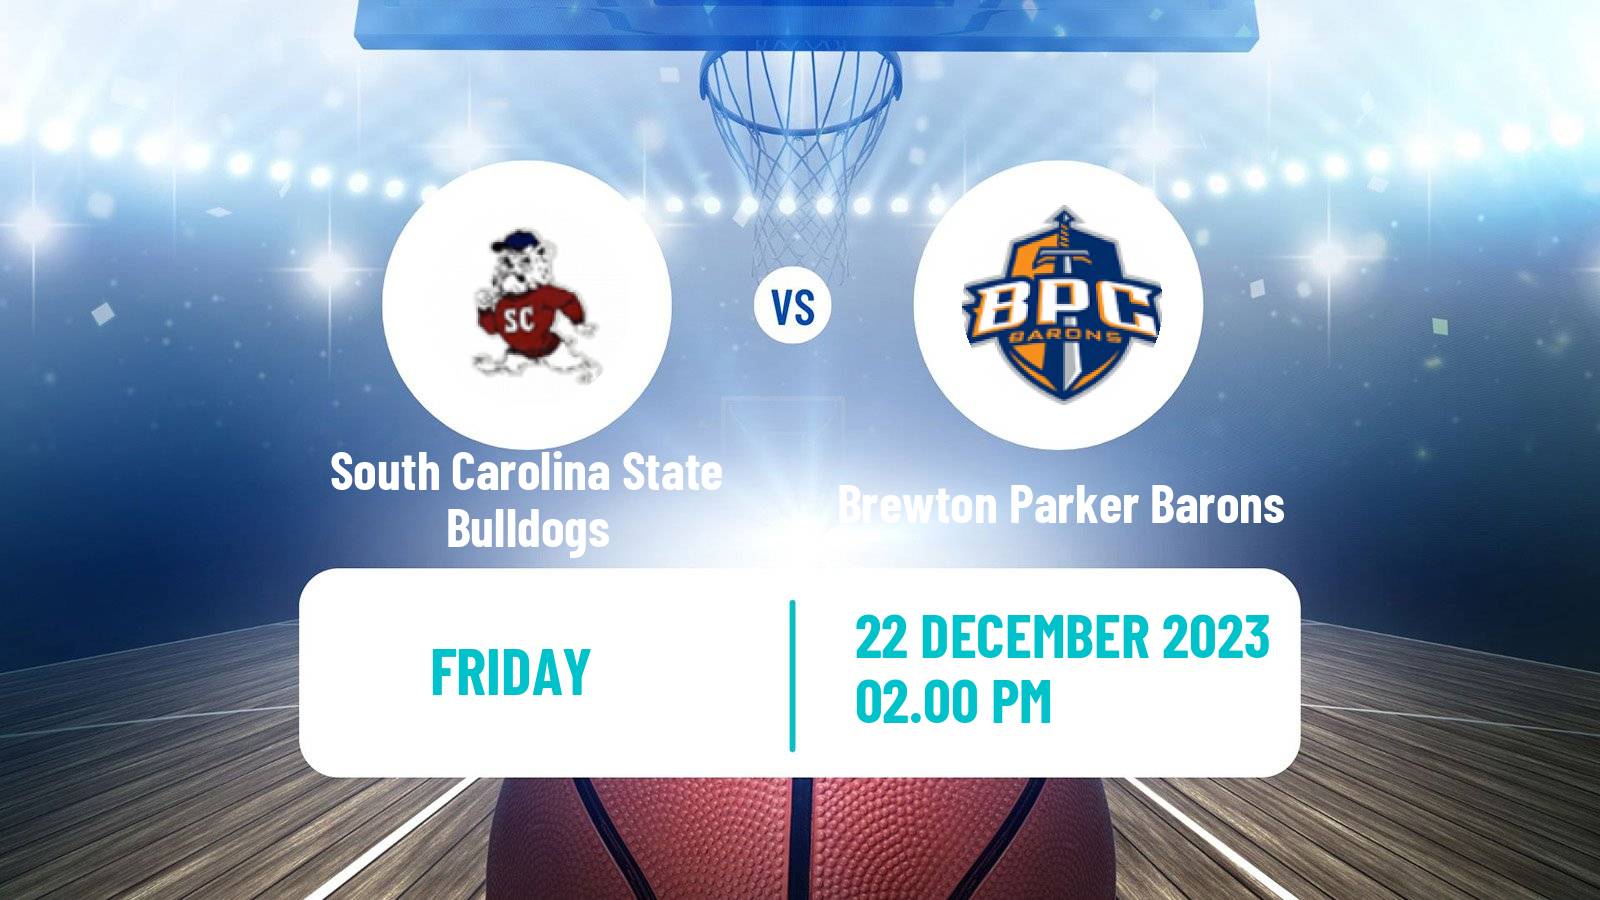 Basketball NCAA College Basketball South Carolina State Bulldogs - Brewton Parker Barons